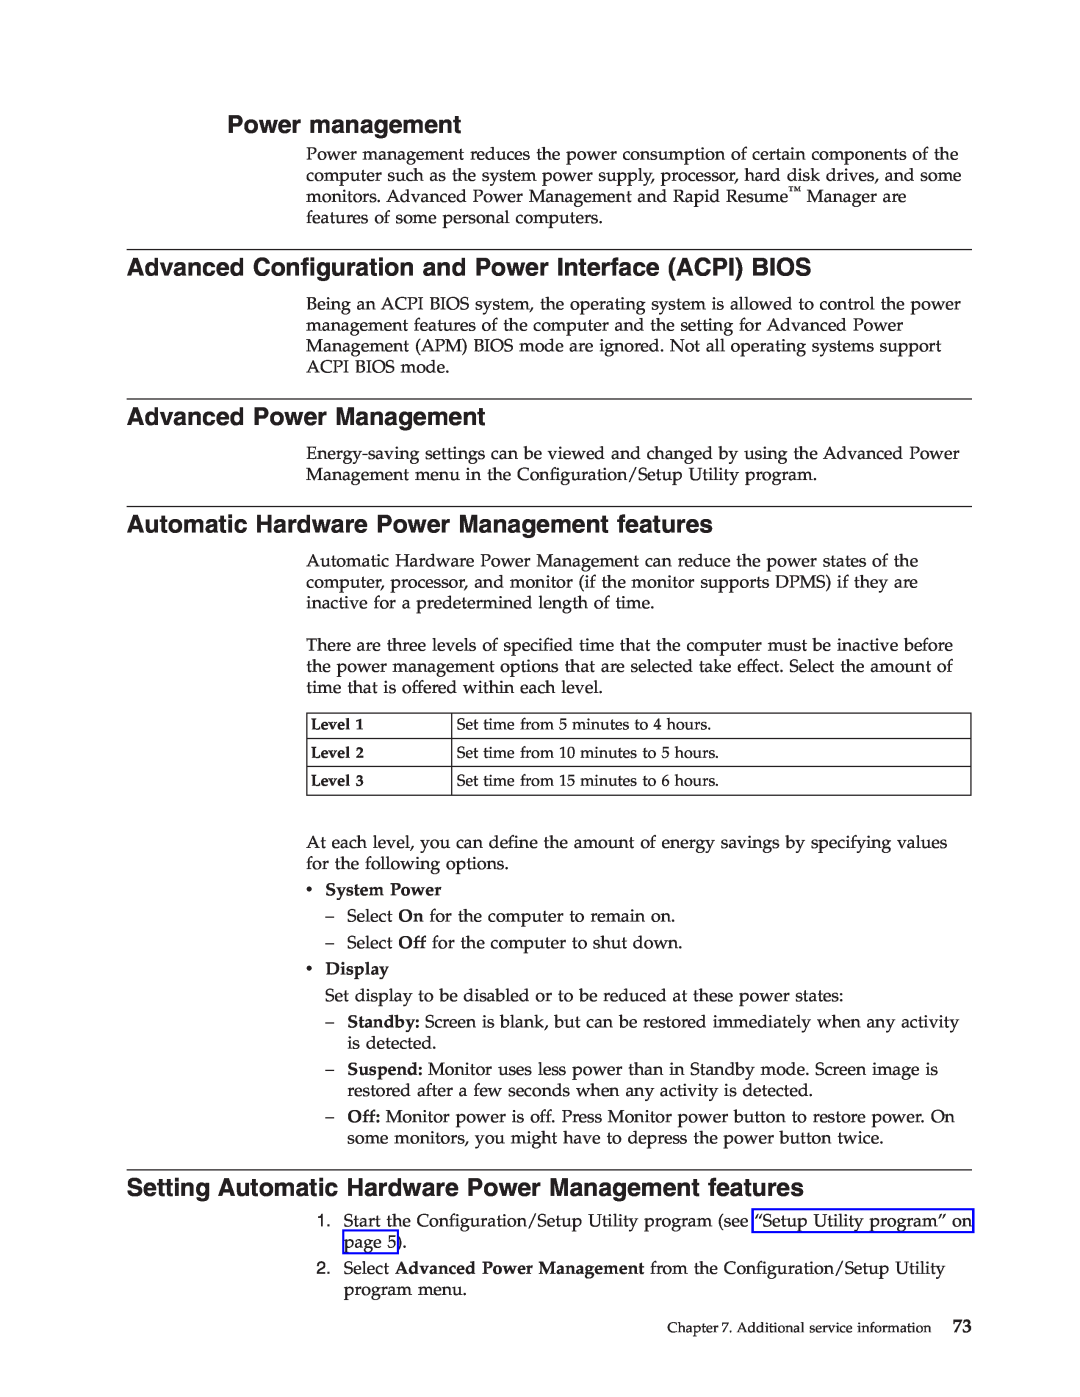 IBM 2179, 6643 manual Power management, Advanced Configuration and Power Interface ACPI BIOS, Advanced Power Management 